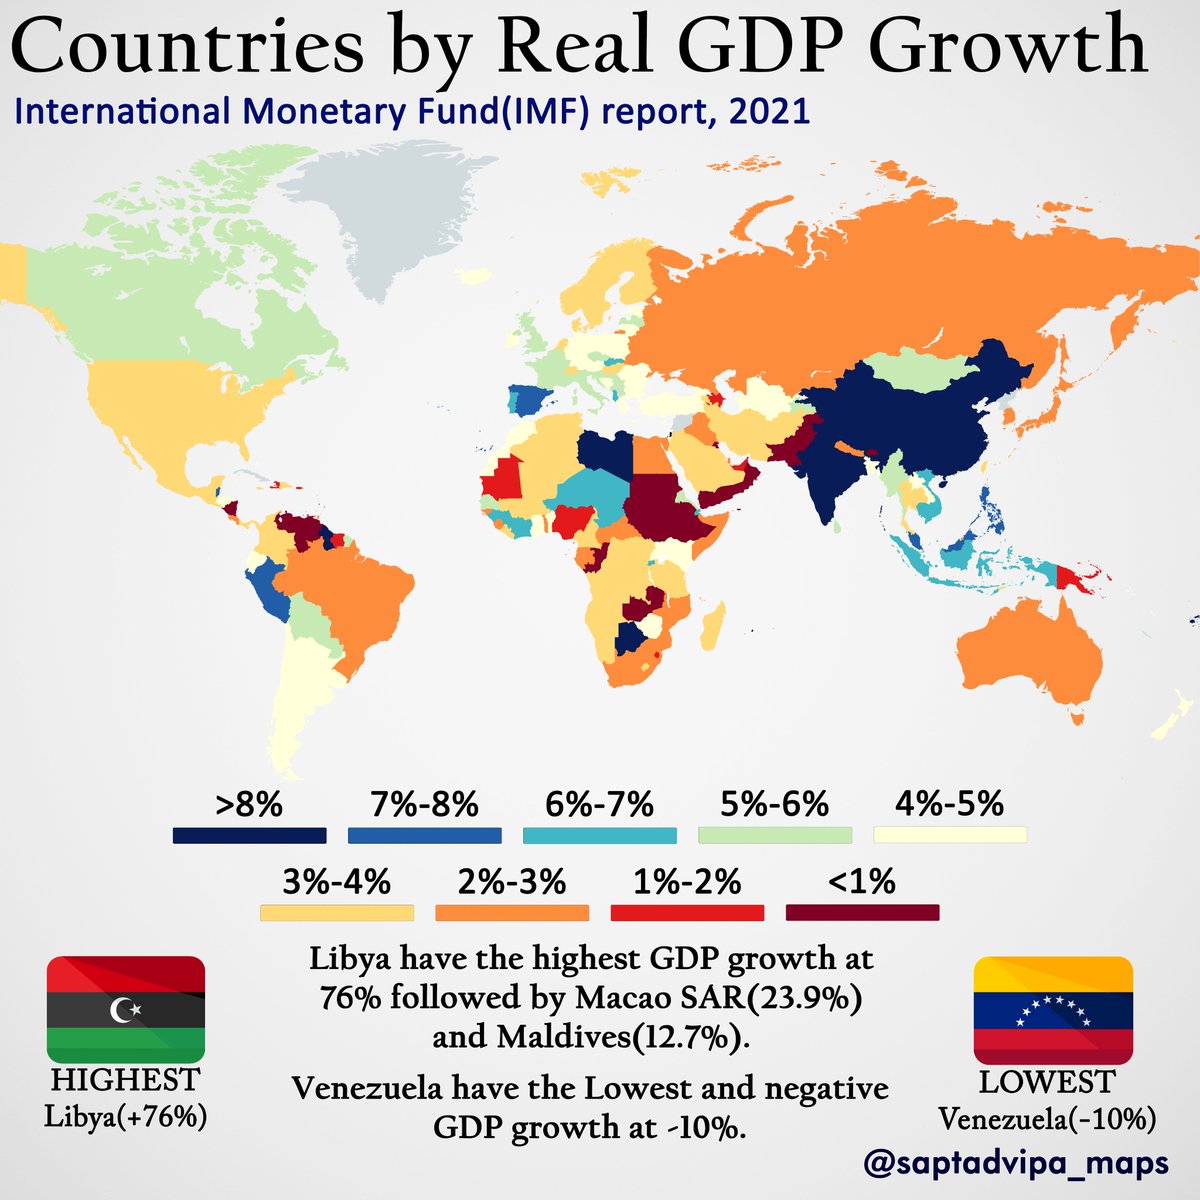 ট ইট র とぅーれ アフリカで頑張る商人 21年gdp成長予想 Imf 一番高成長率なのは 北アフリカ リビア 一番低いのは南米の ベネズエラ です アフリカ大陸は 2 4 ぐらいのレンジです